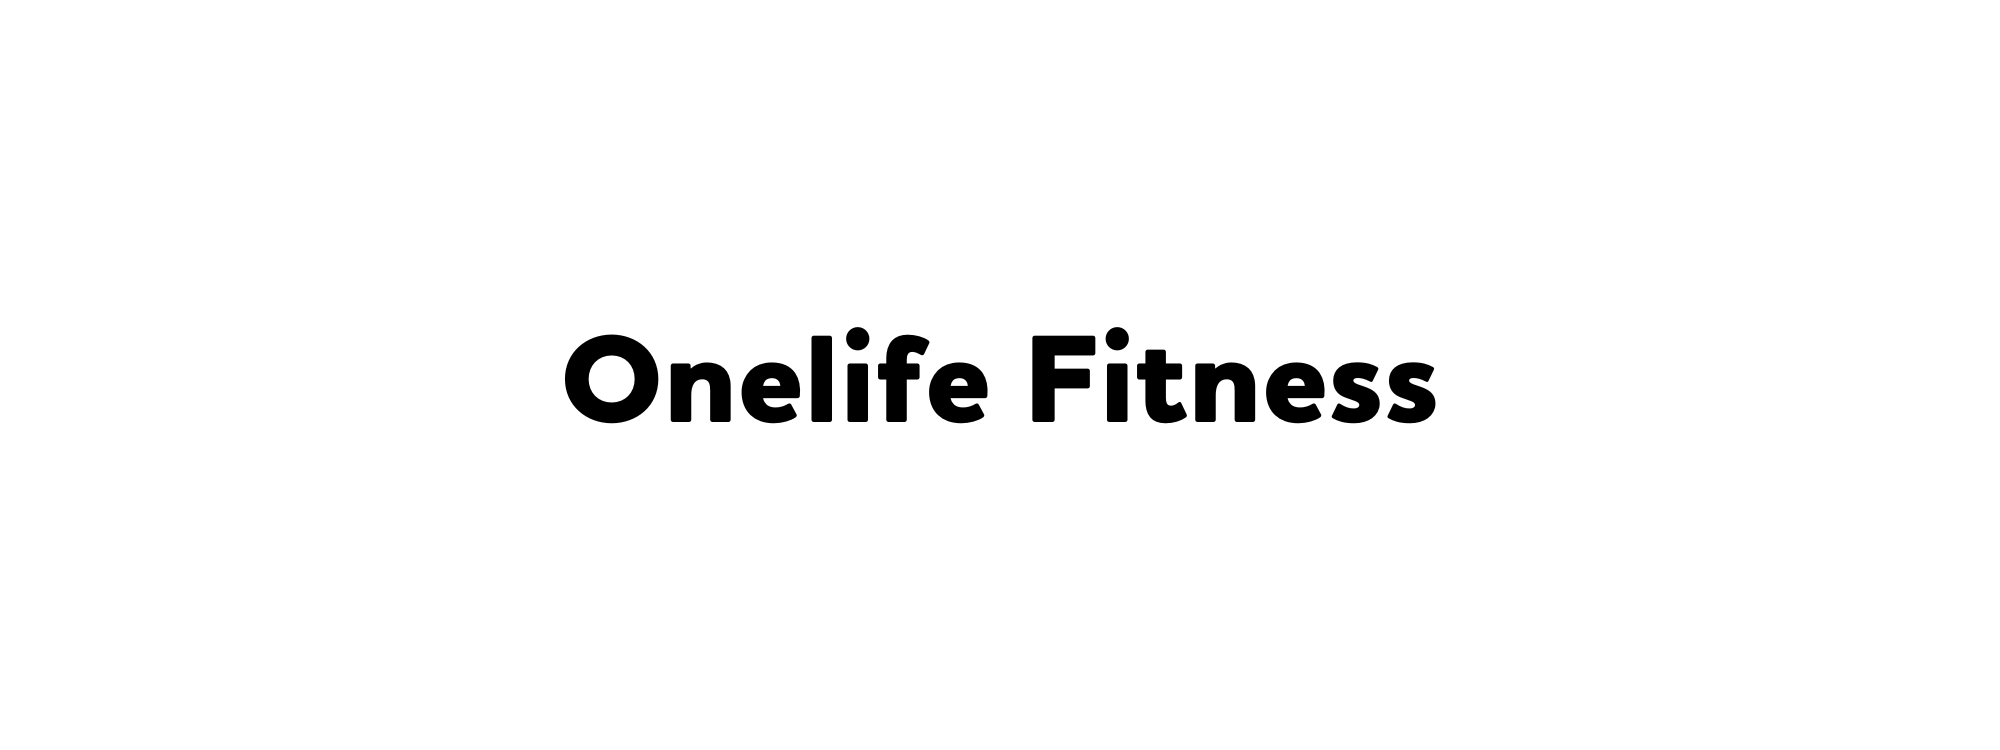 8b. Onelife Fitness (amigo)